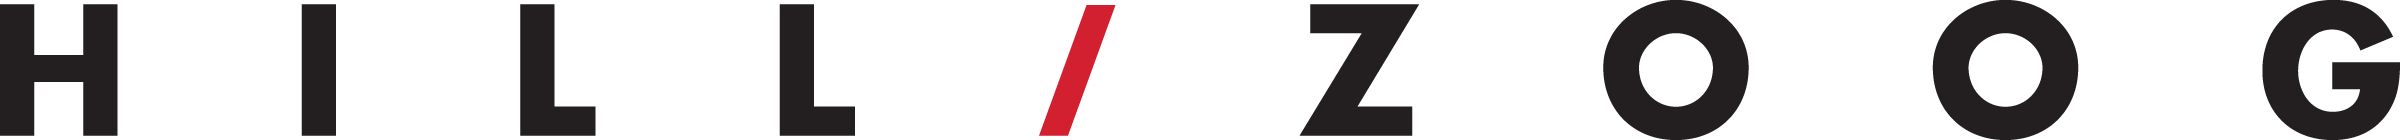 HillZoog Logo